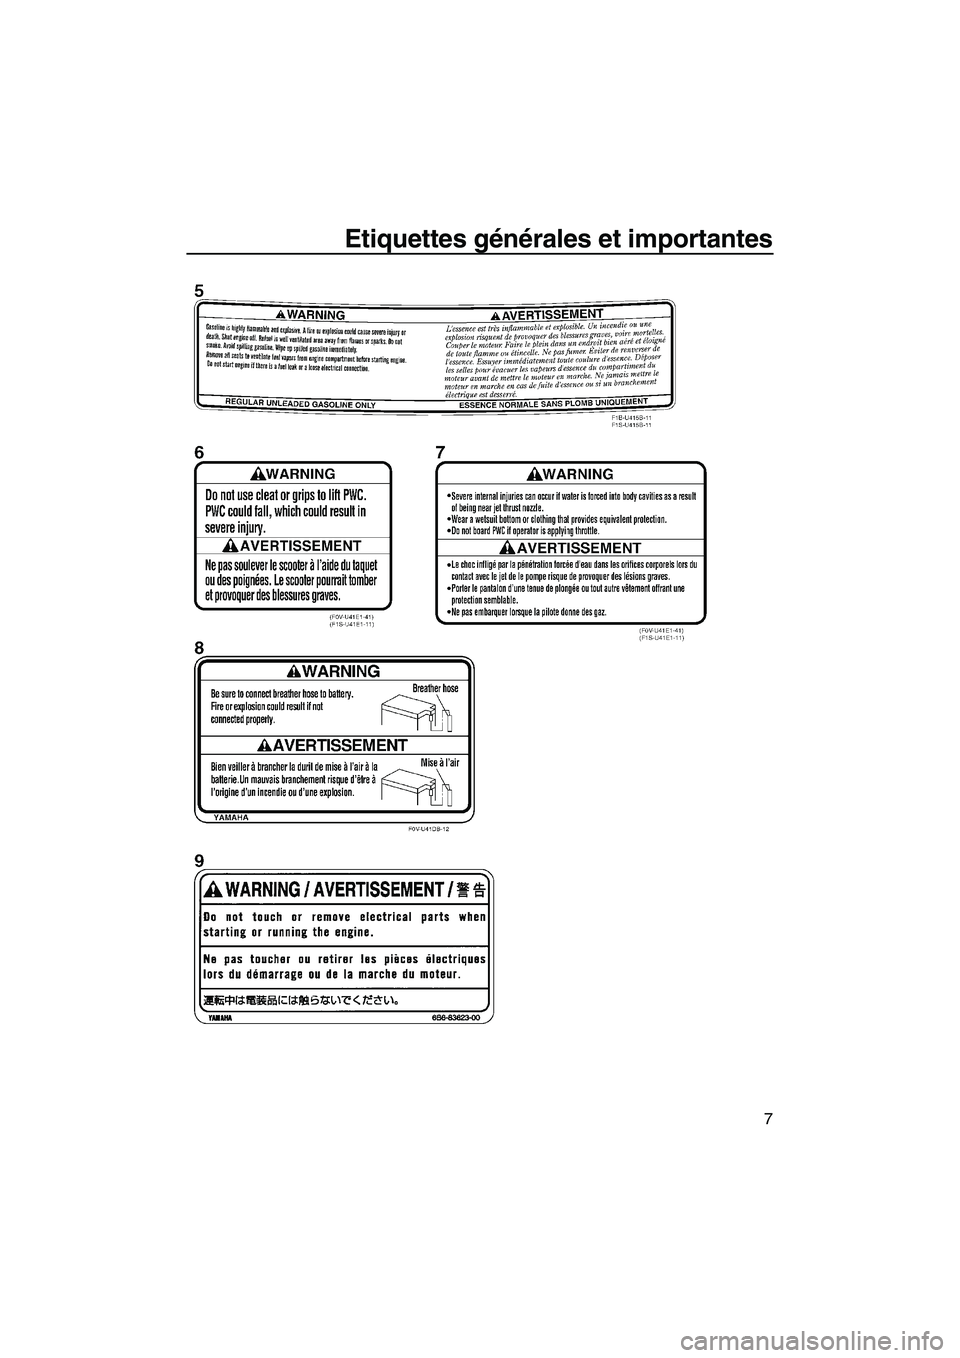 YAMAHA VX SPORT 2010  Notices Demploi (in French) Etiquettes générales et importantes
7
UF2N70F0.book  Page 7  Thursday, October 8, 2009  12:58 PM 